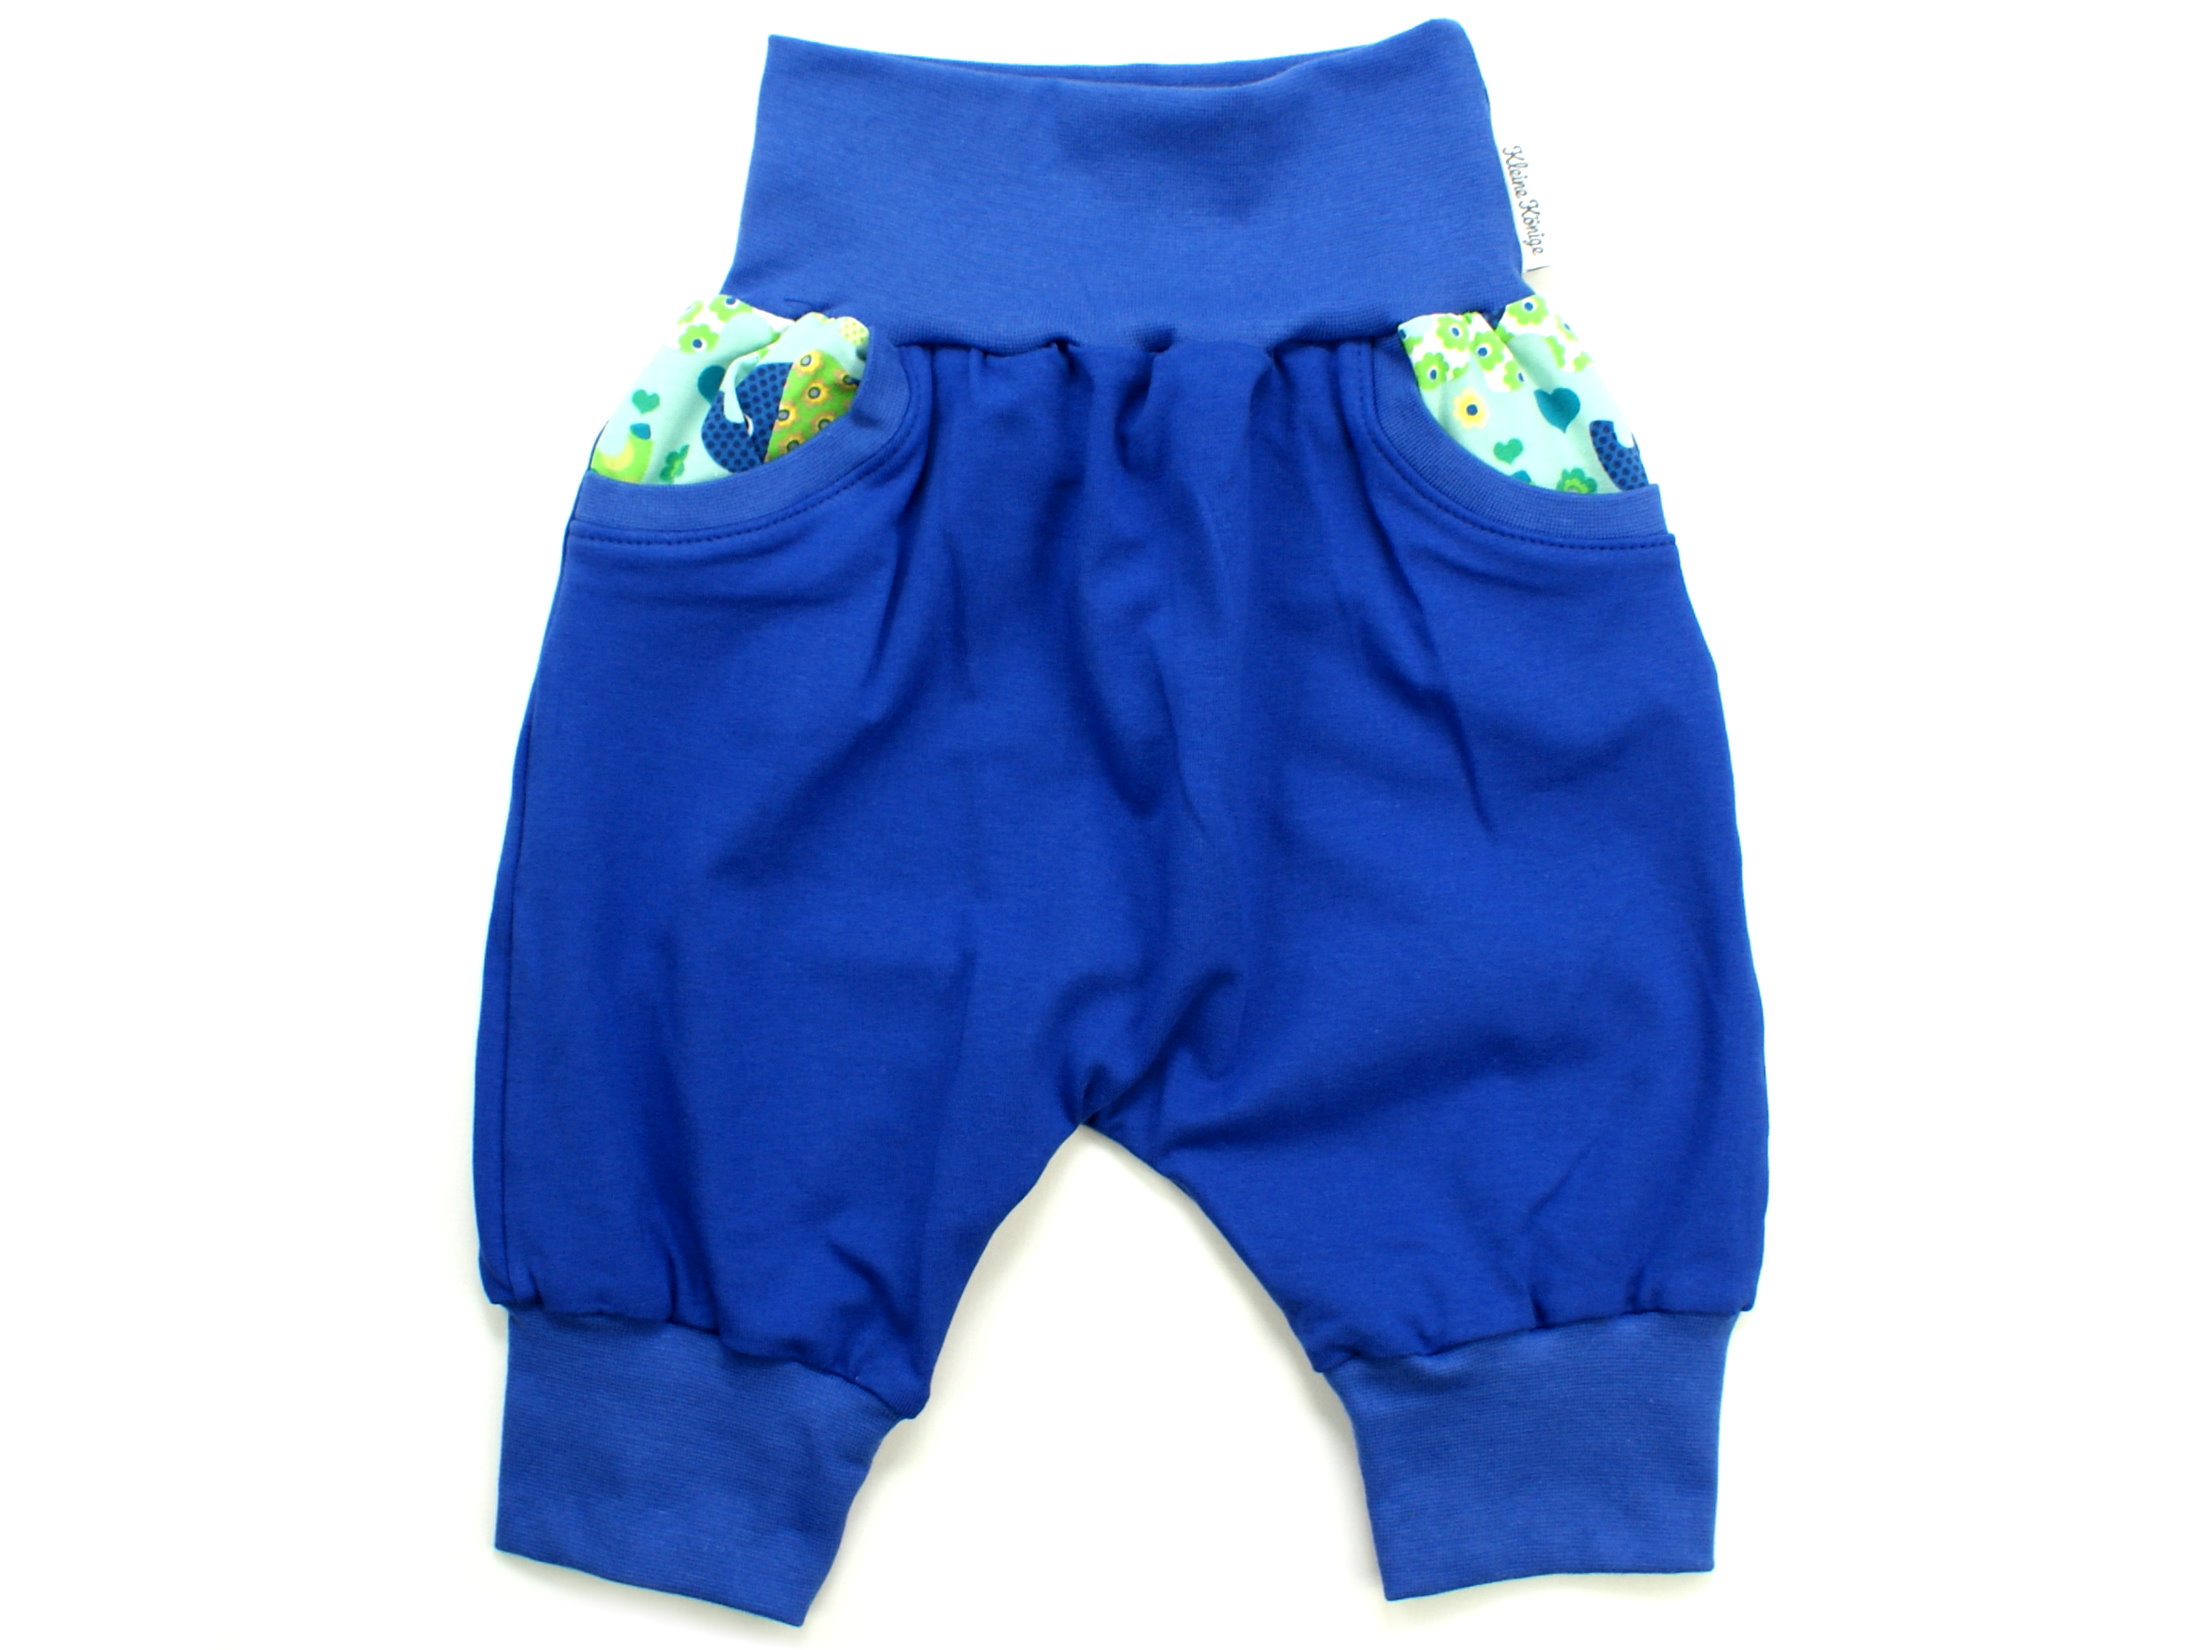 Kinder Bermuda-Shorts "Elefantenparty" türkis royalblau